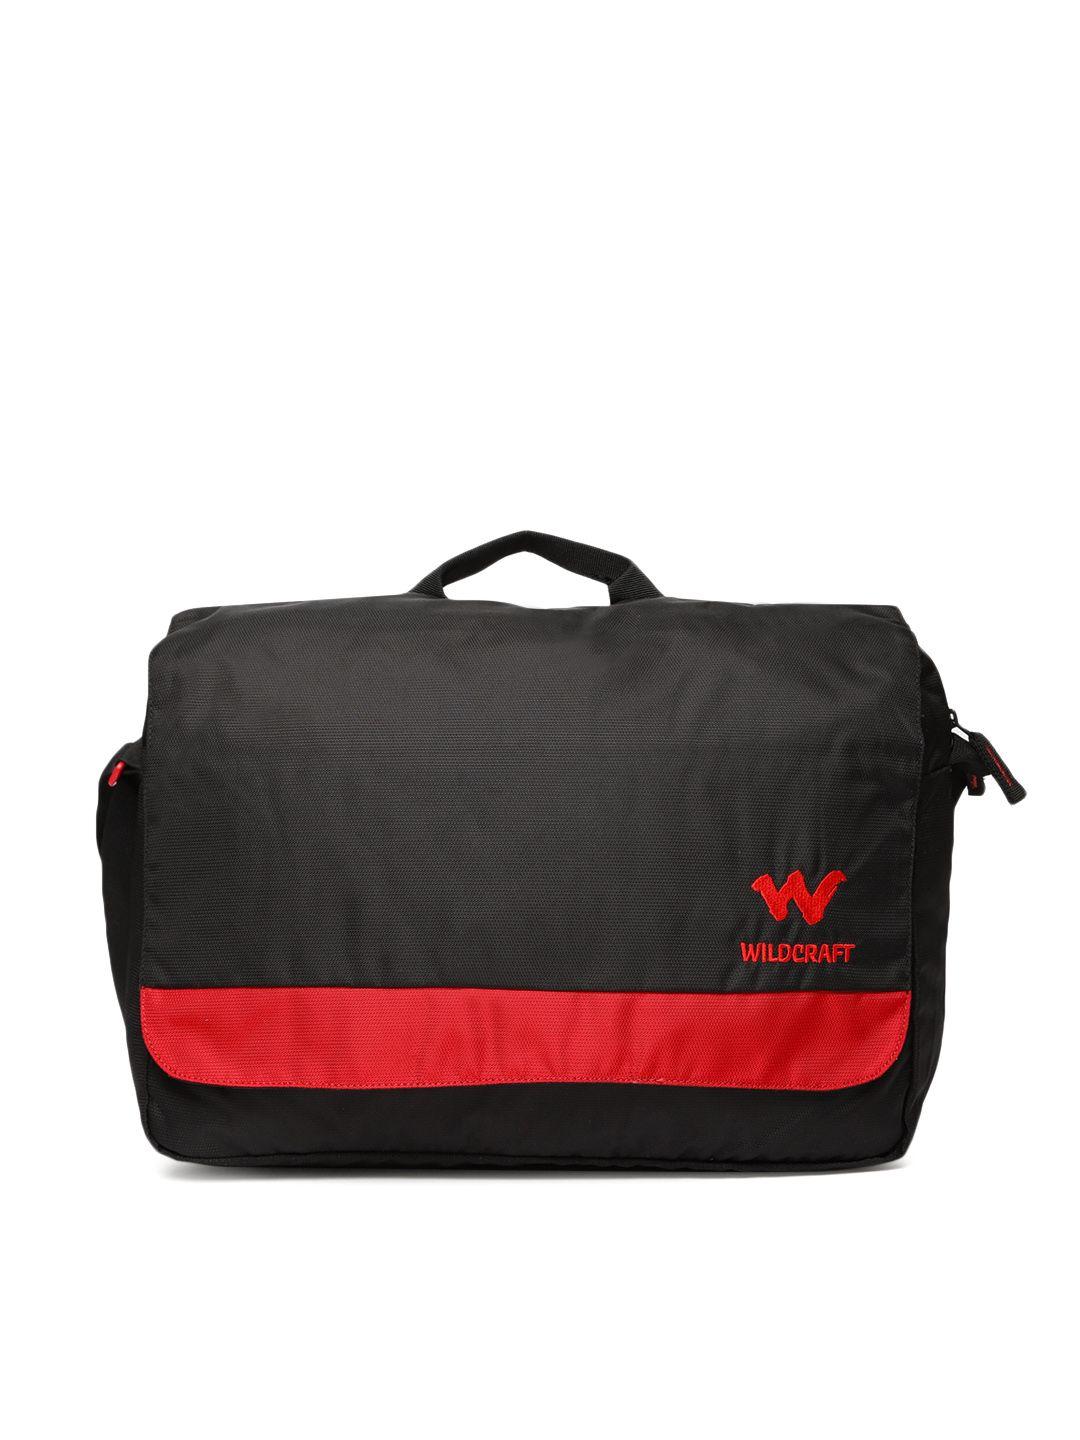 wildcraft unisex black solid messenger bag